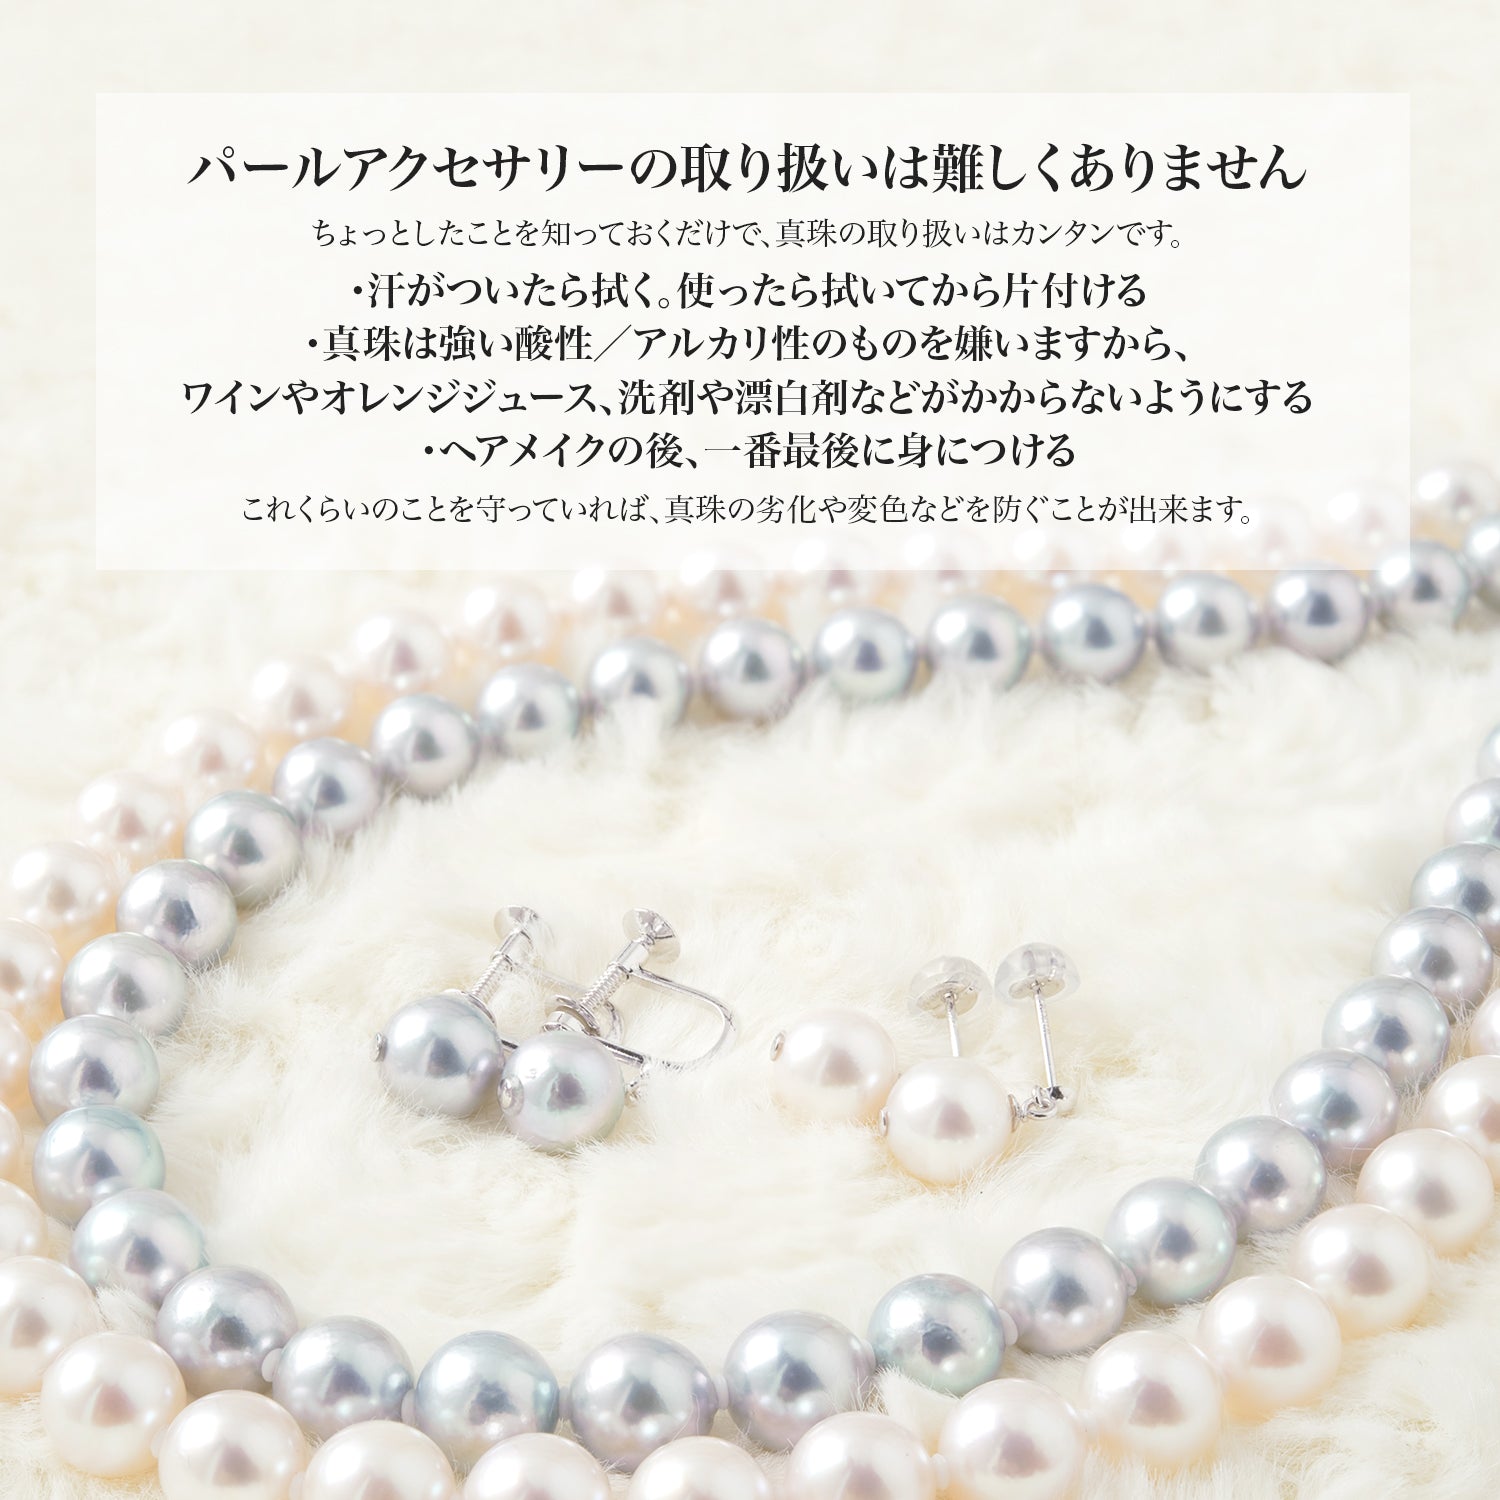 Akoya Pearl Through Necklace [8.0-9.0mm] SV925 Venetian Chain Pearl Accessory